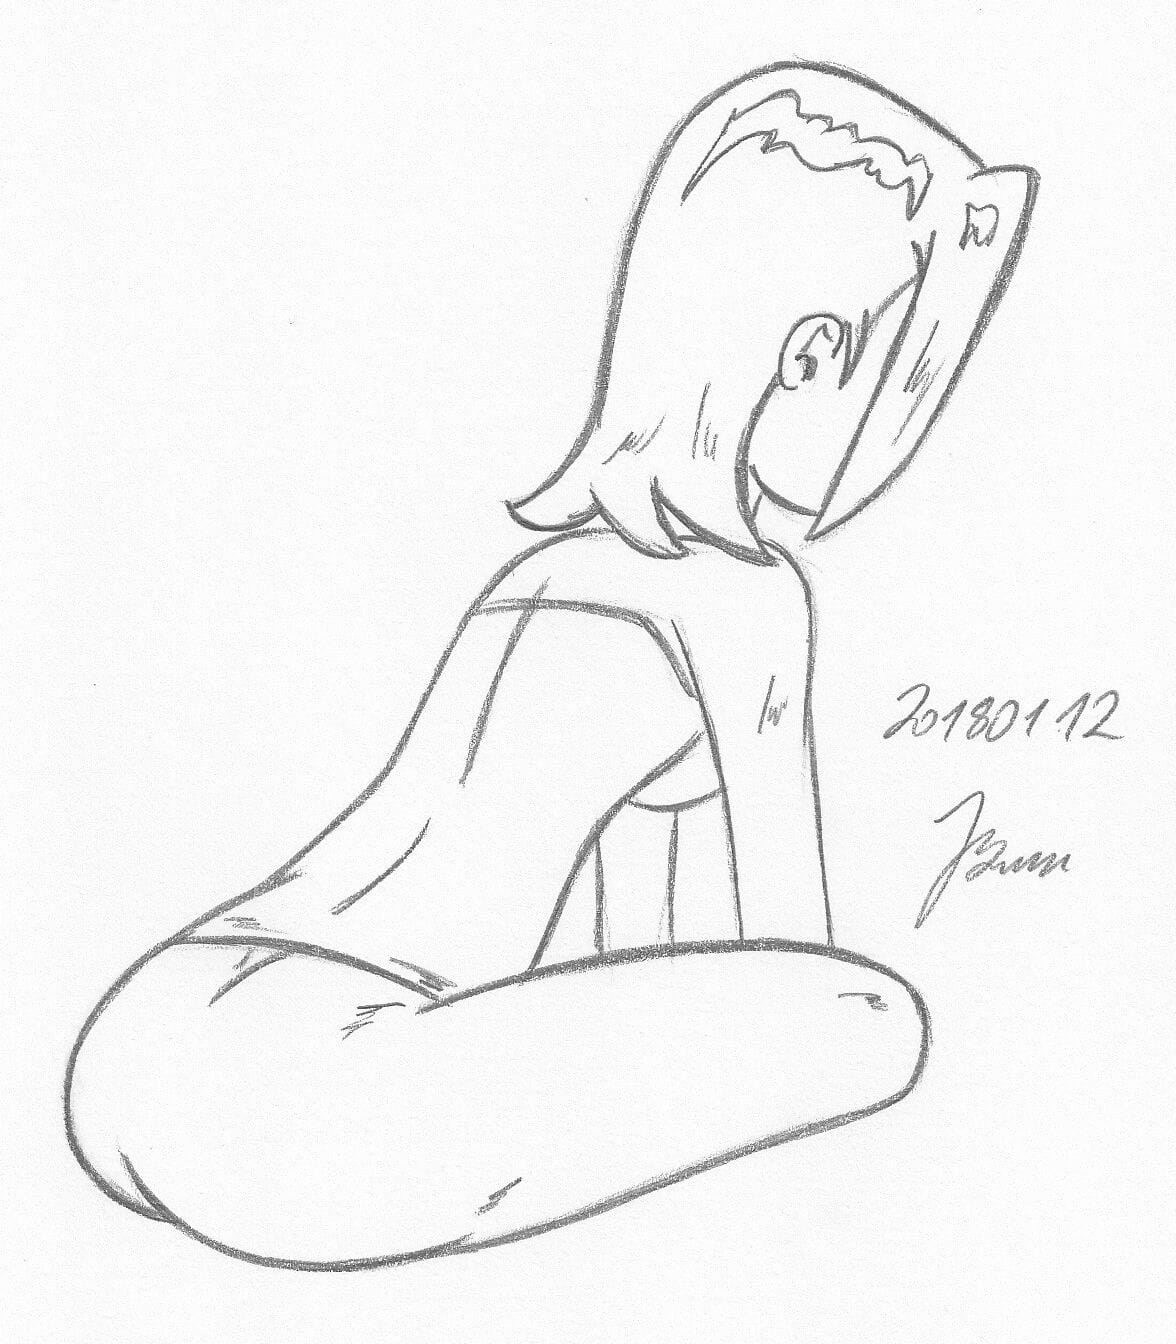 Gwen tennyson_ ben10_my miny bocetos work_5 Parte 2 page 1